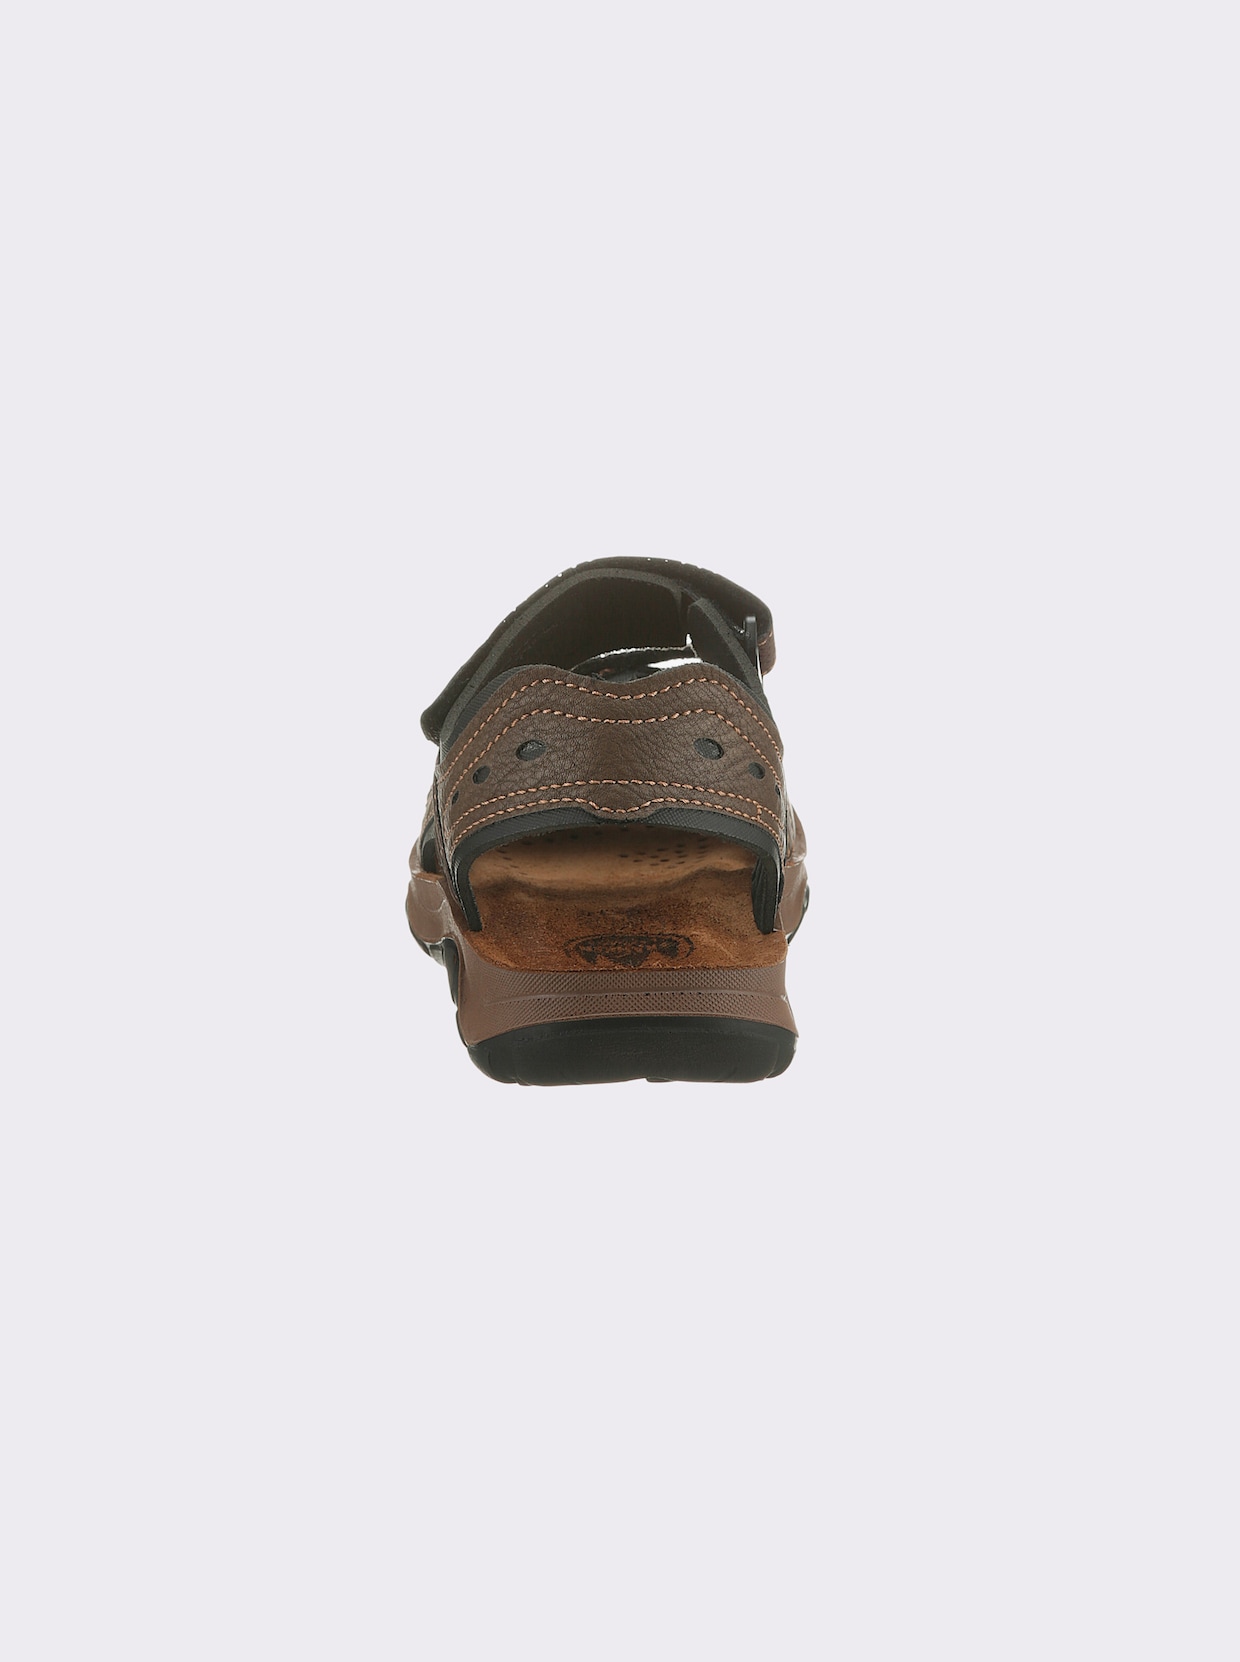 Franken Schuhe Sandale - braun